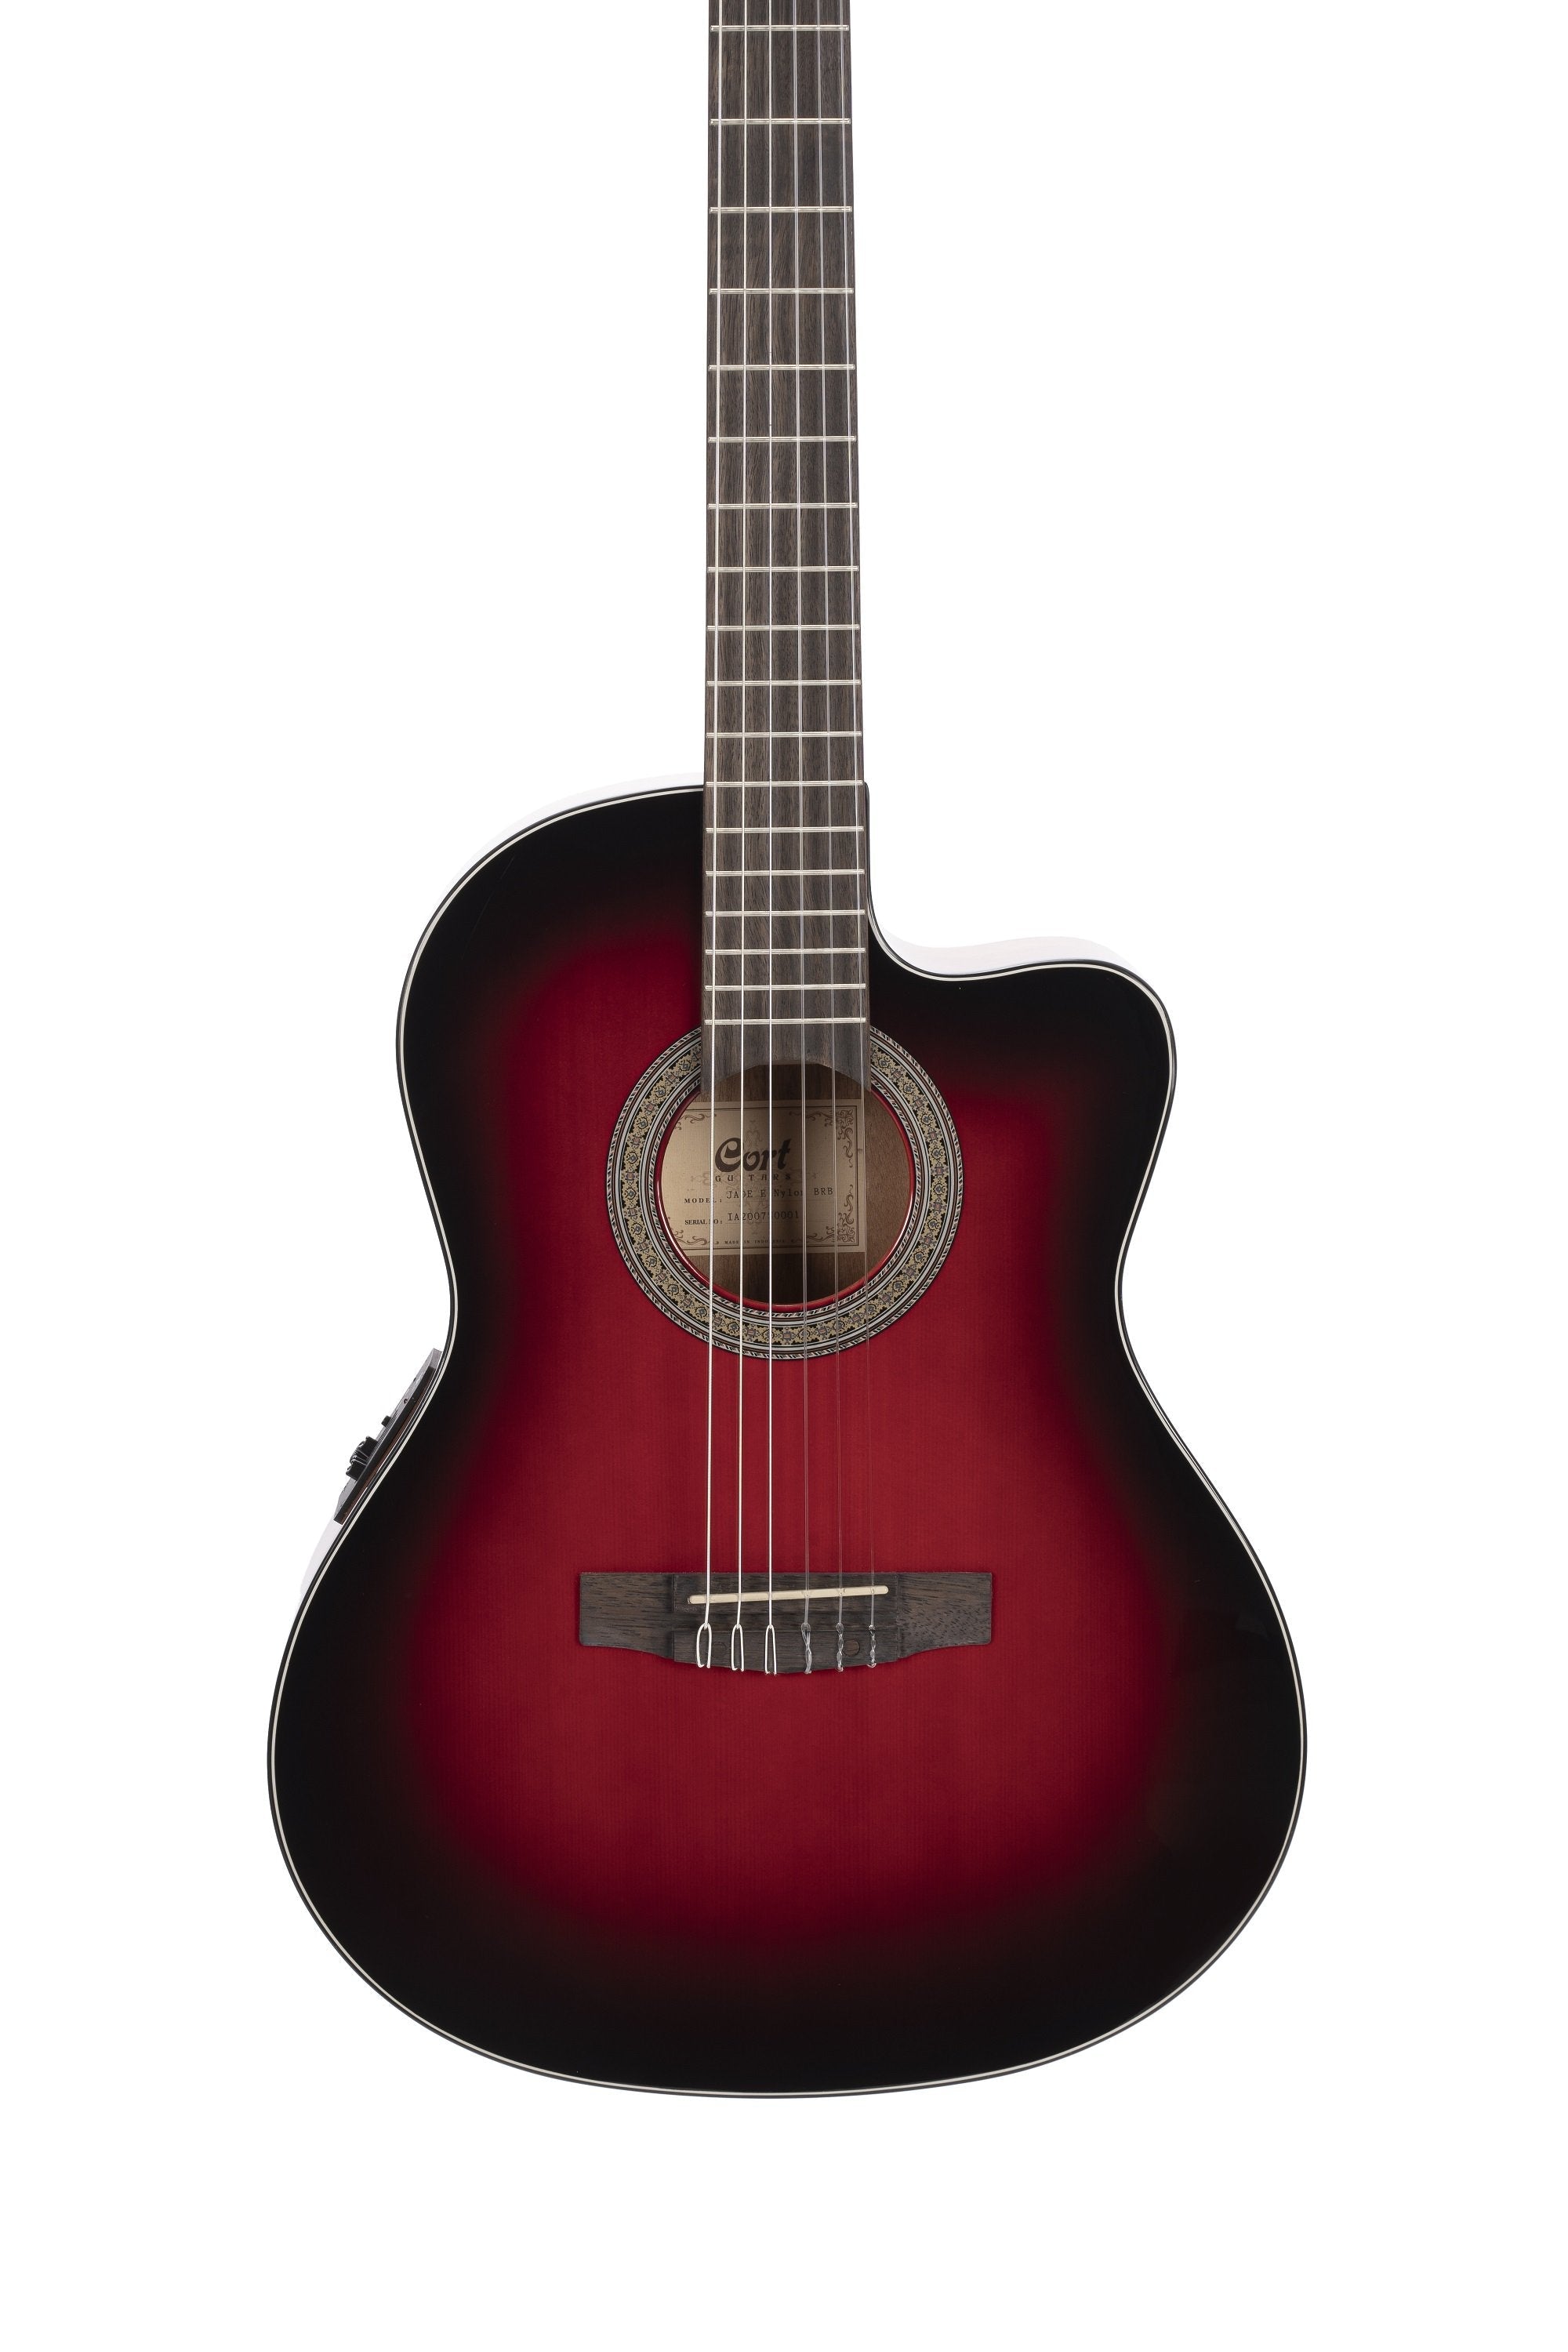 Cort Jade E Nylon Burgundy Red Burst, Acoustic Guitar for sale at Richards Guitars.